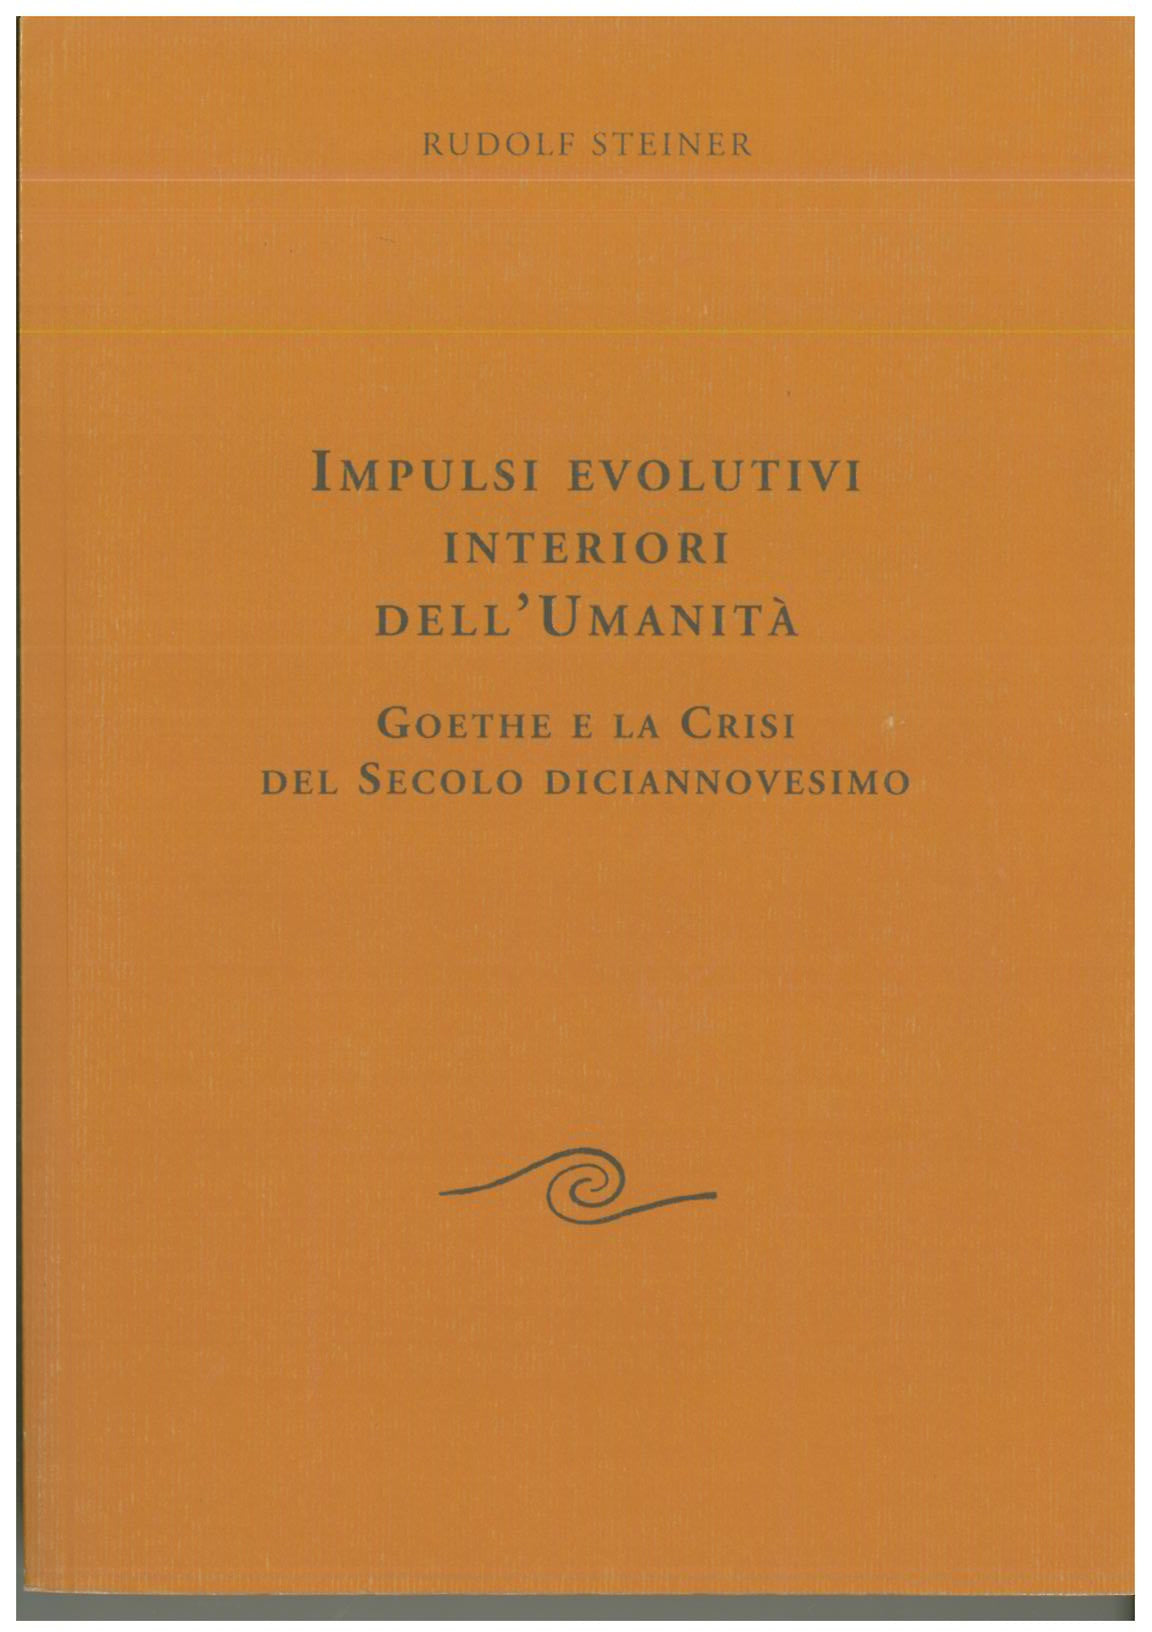 Impulsi evolutivi interiori dell'umanità - Rudolf Steiner